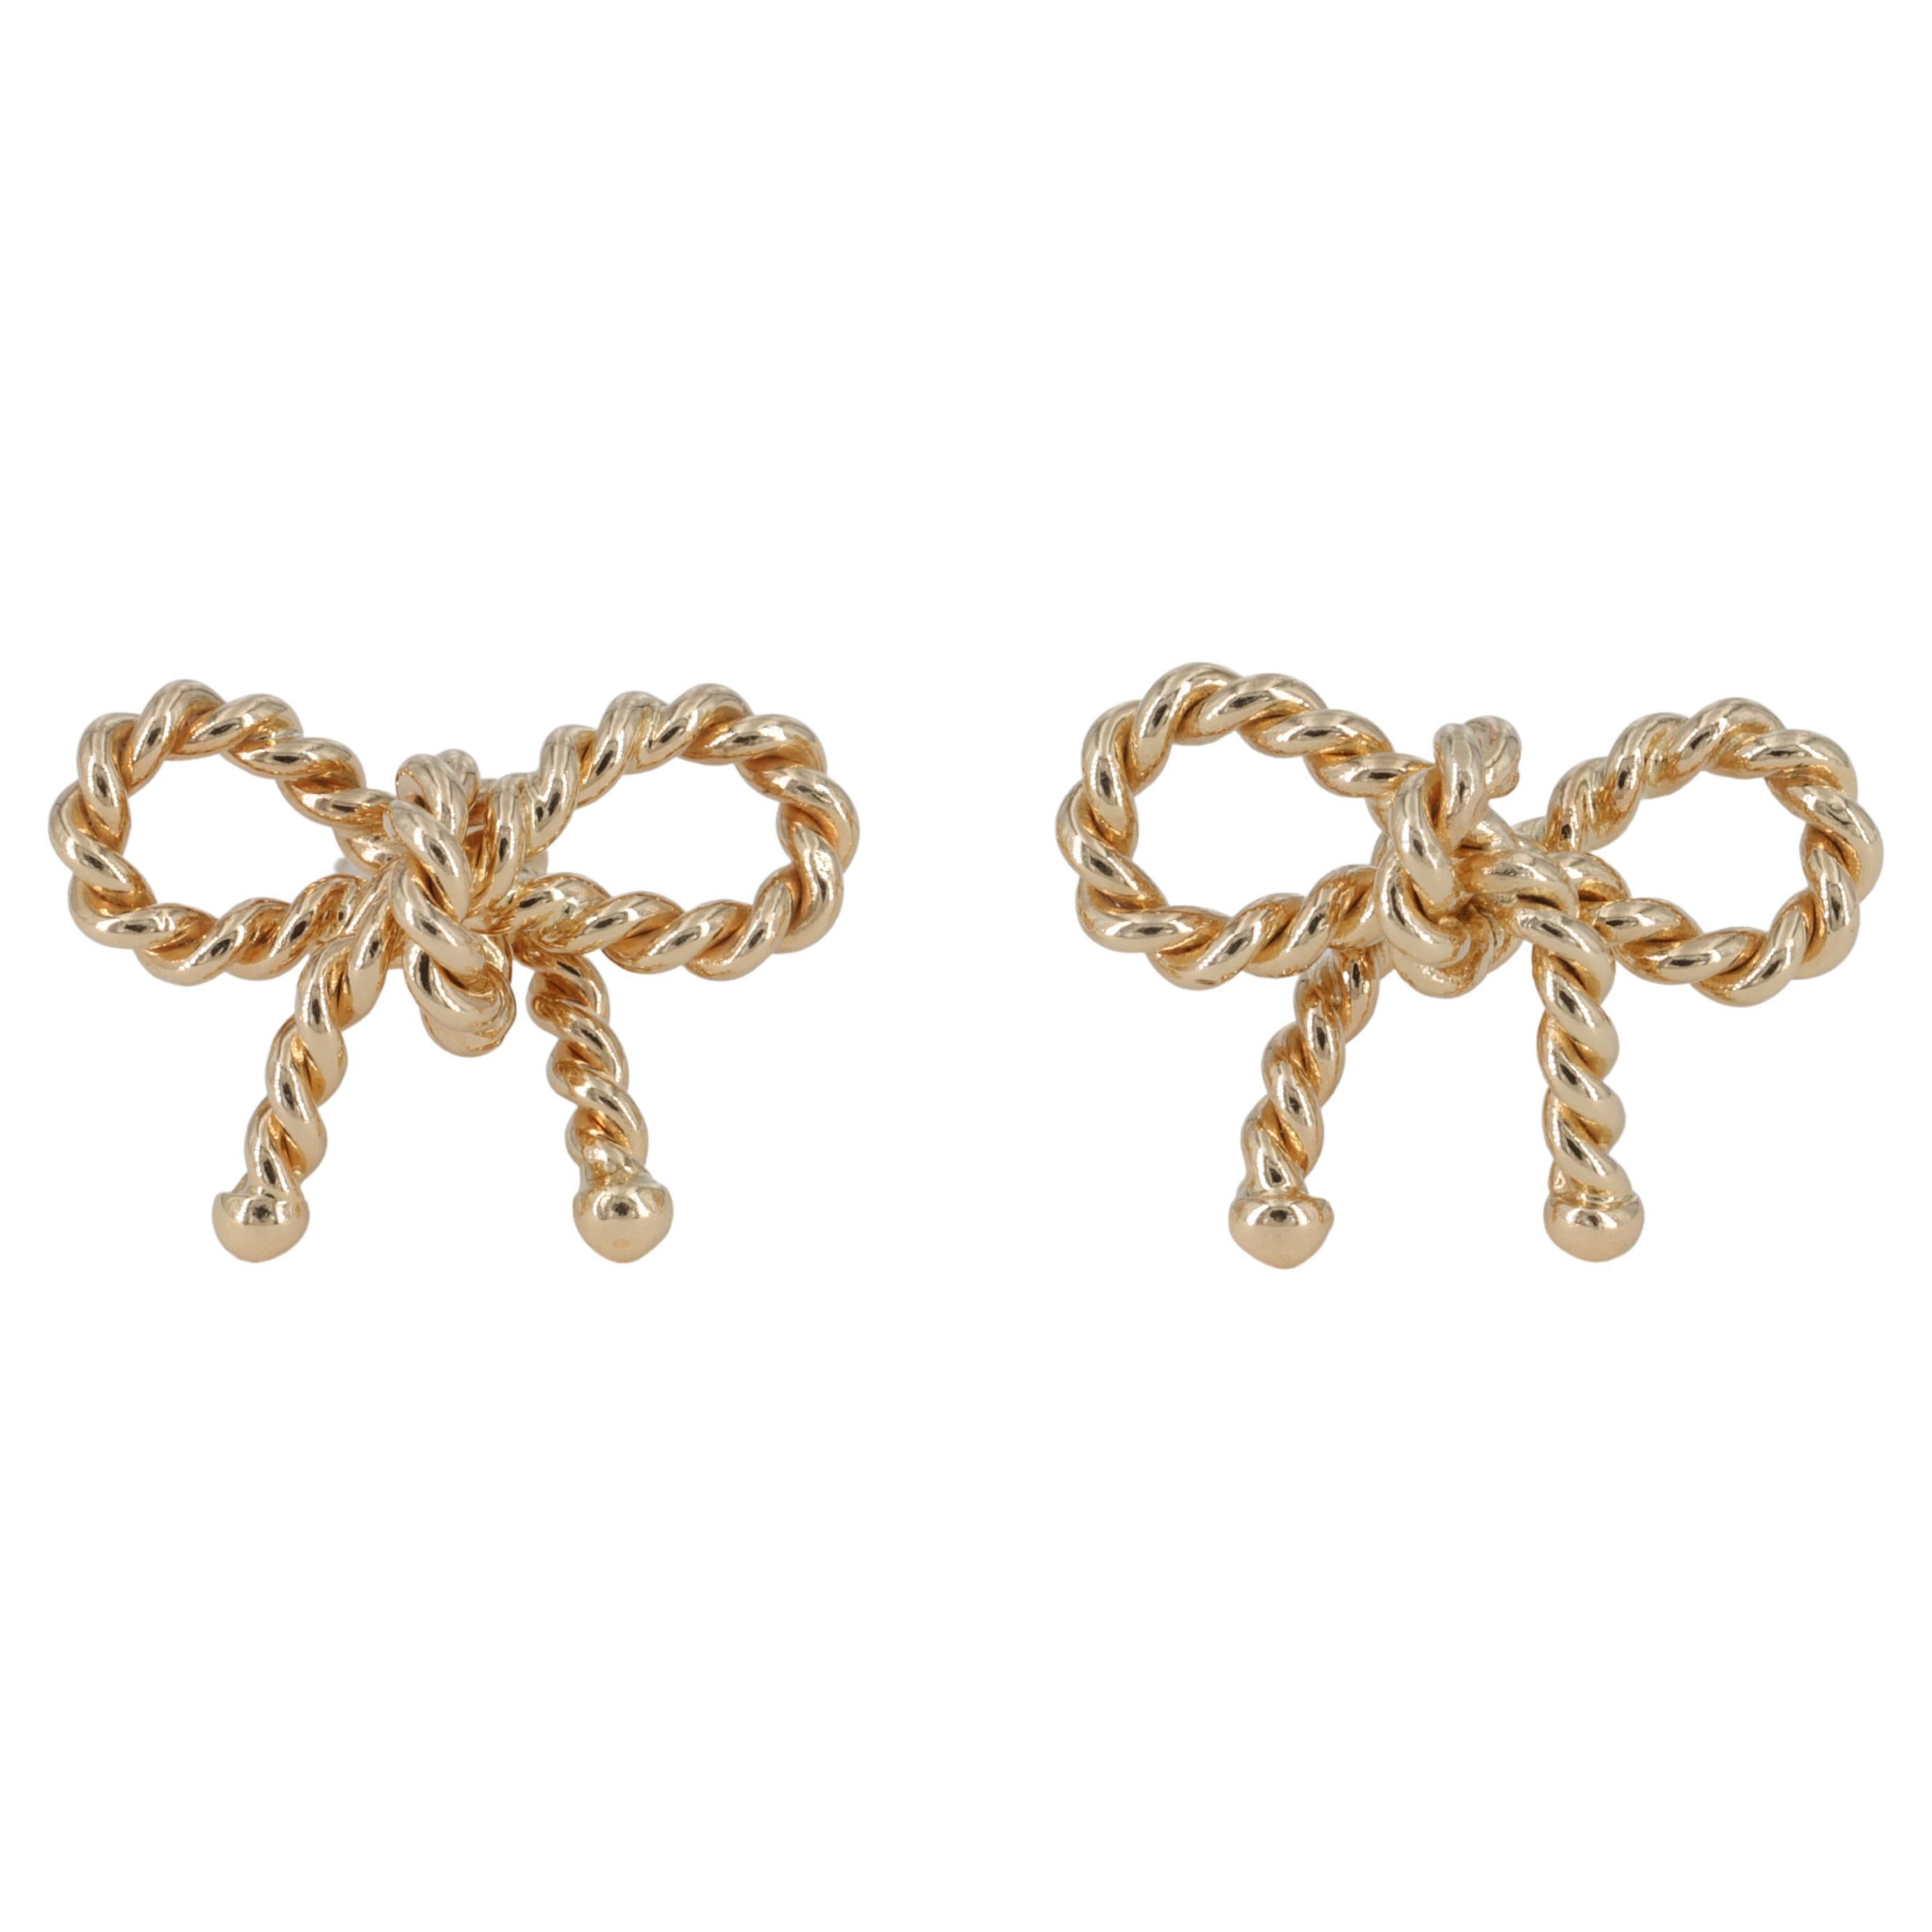 Tiffany & Co. Rope Bow Earrings in 18 Karat Yellow Gold 